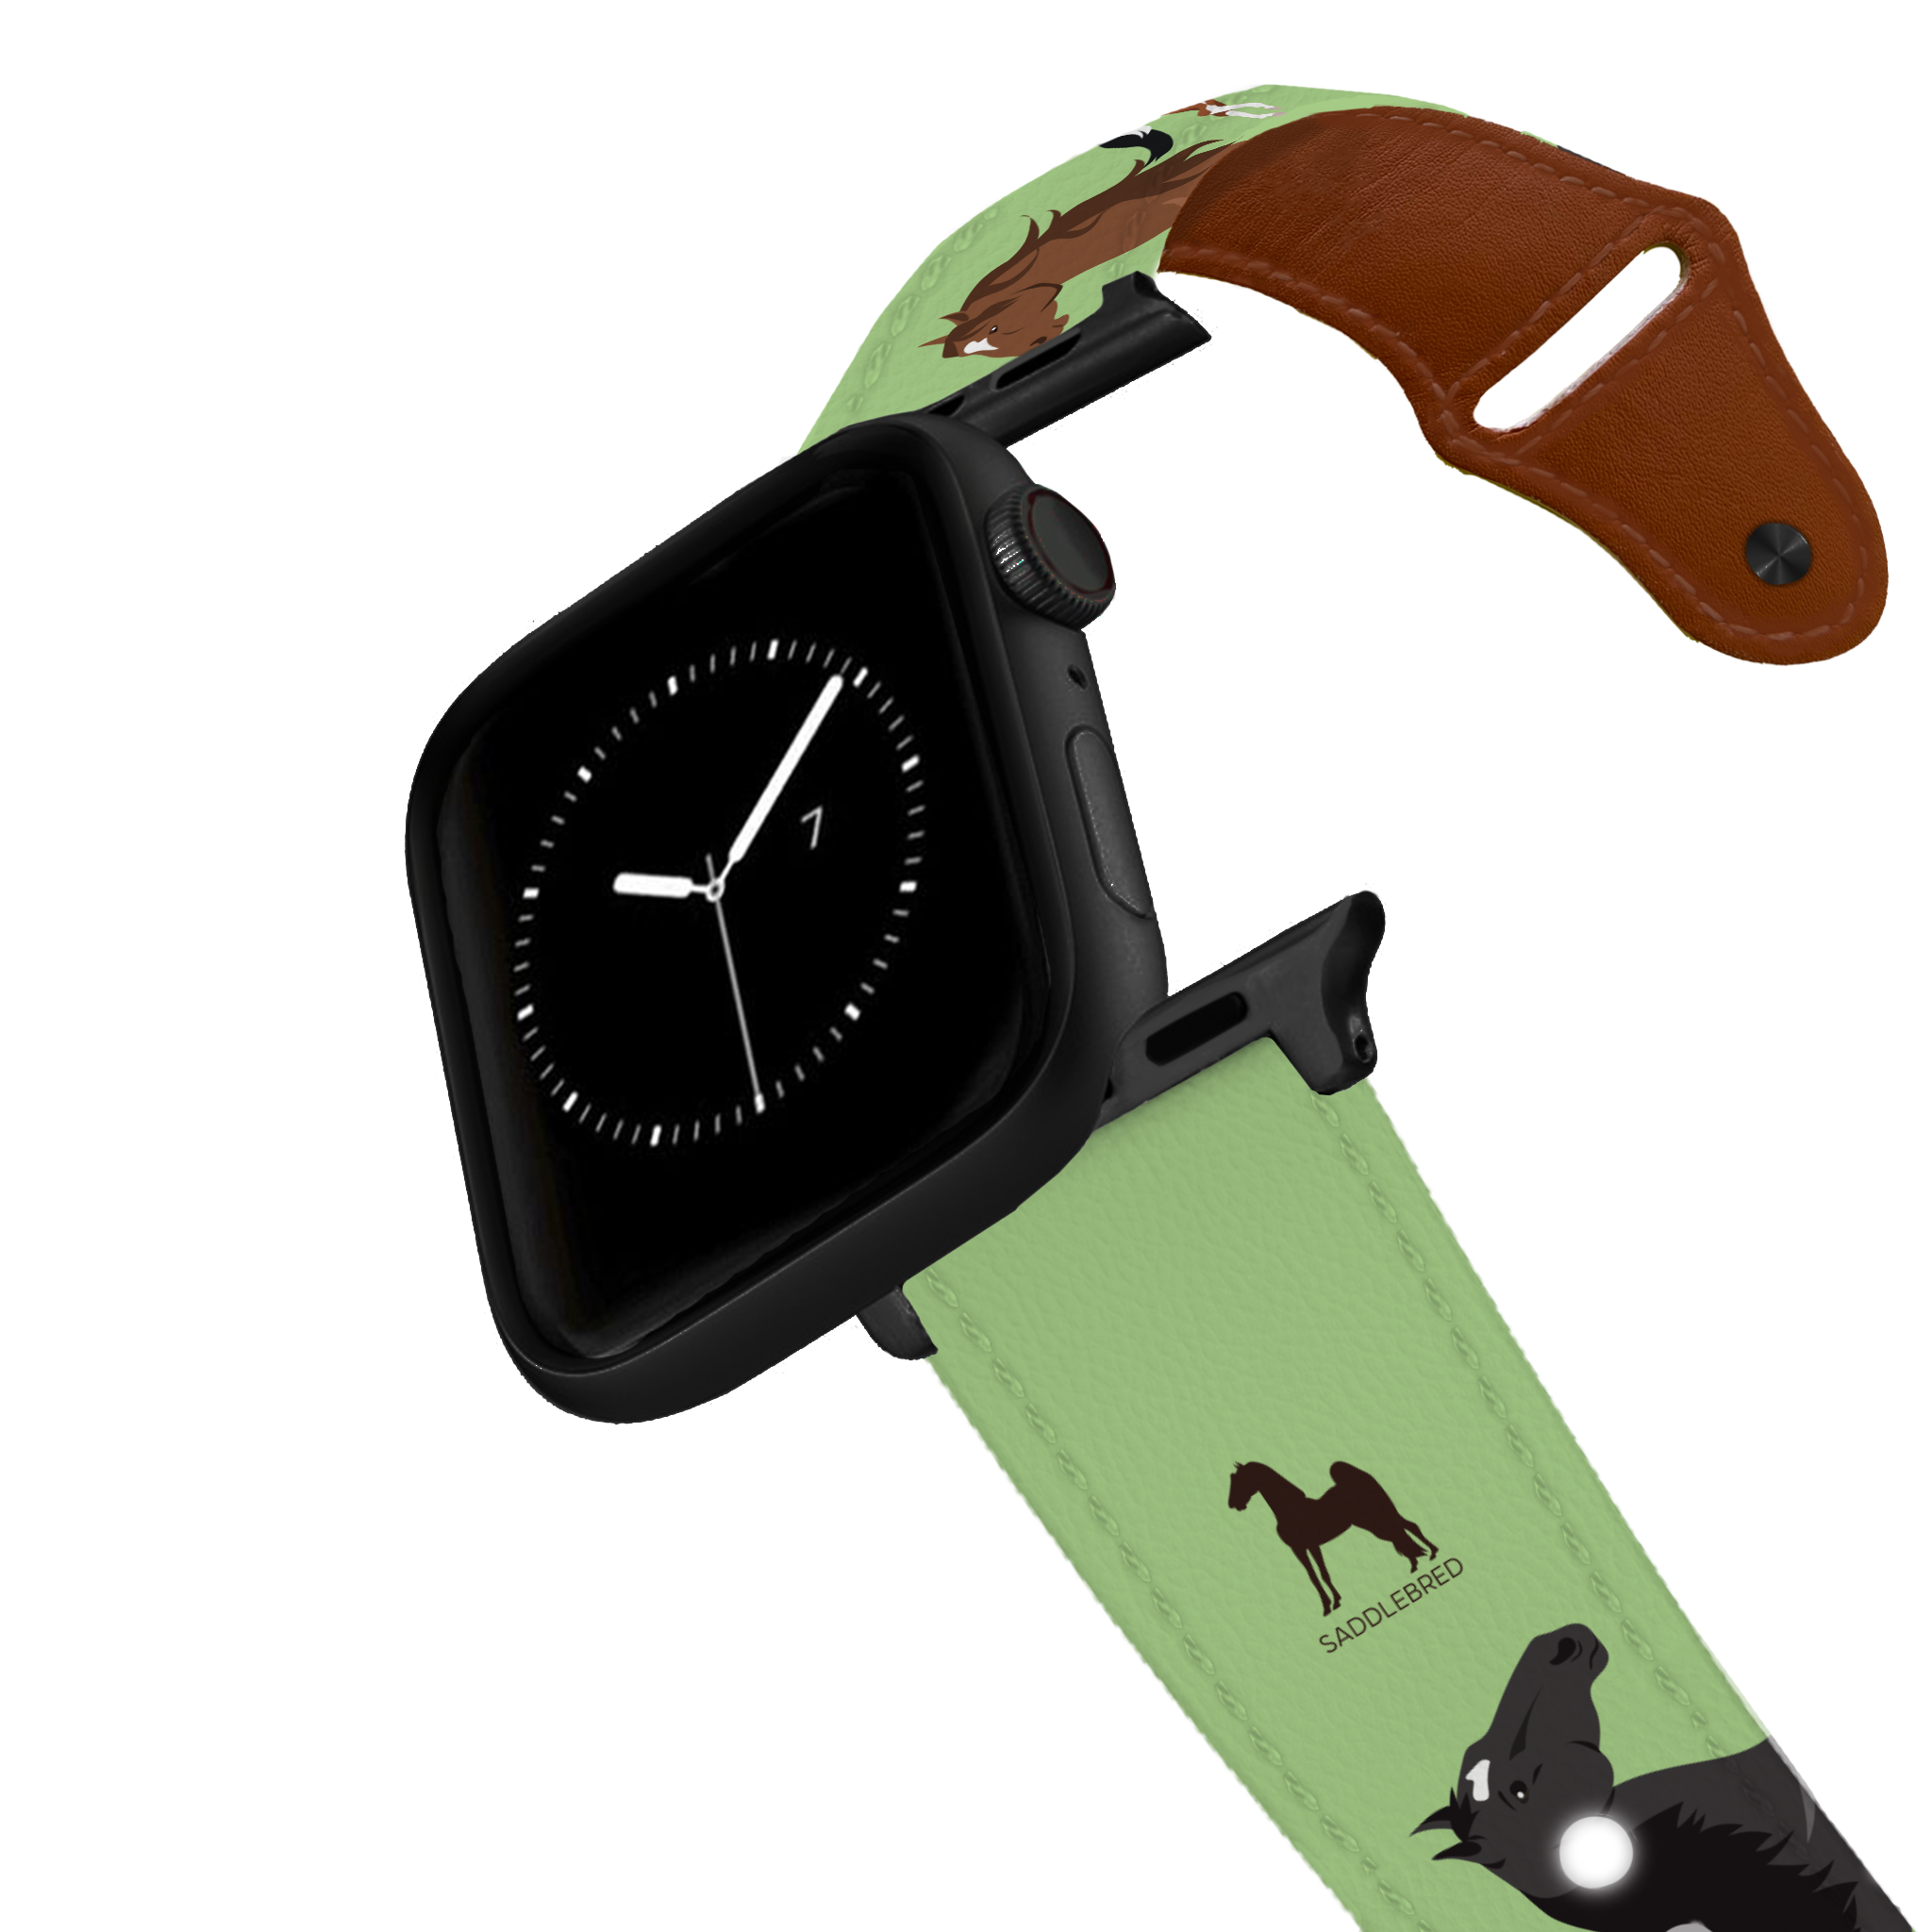 Saddlebred Leather Apple Watch Band